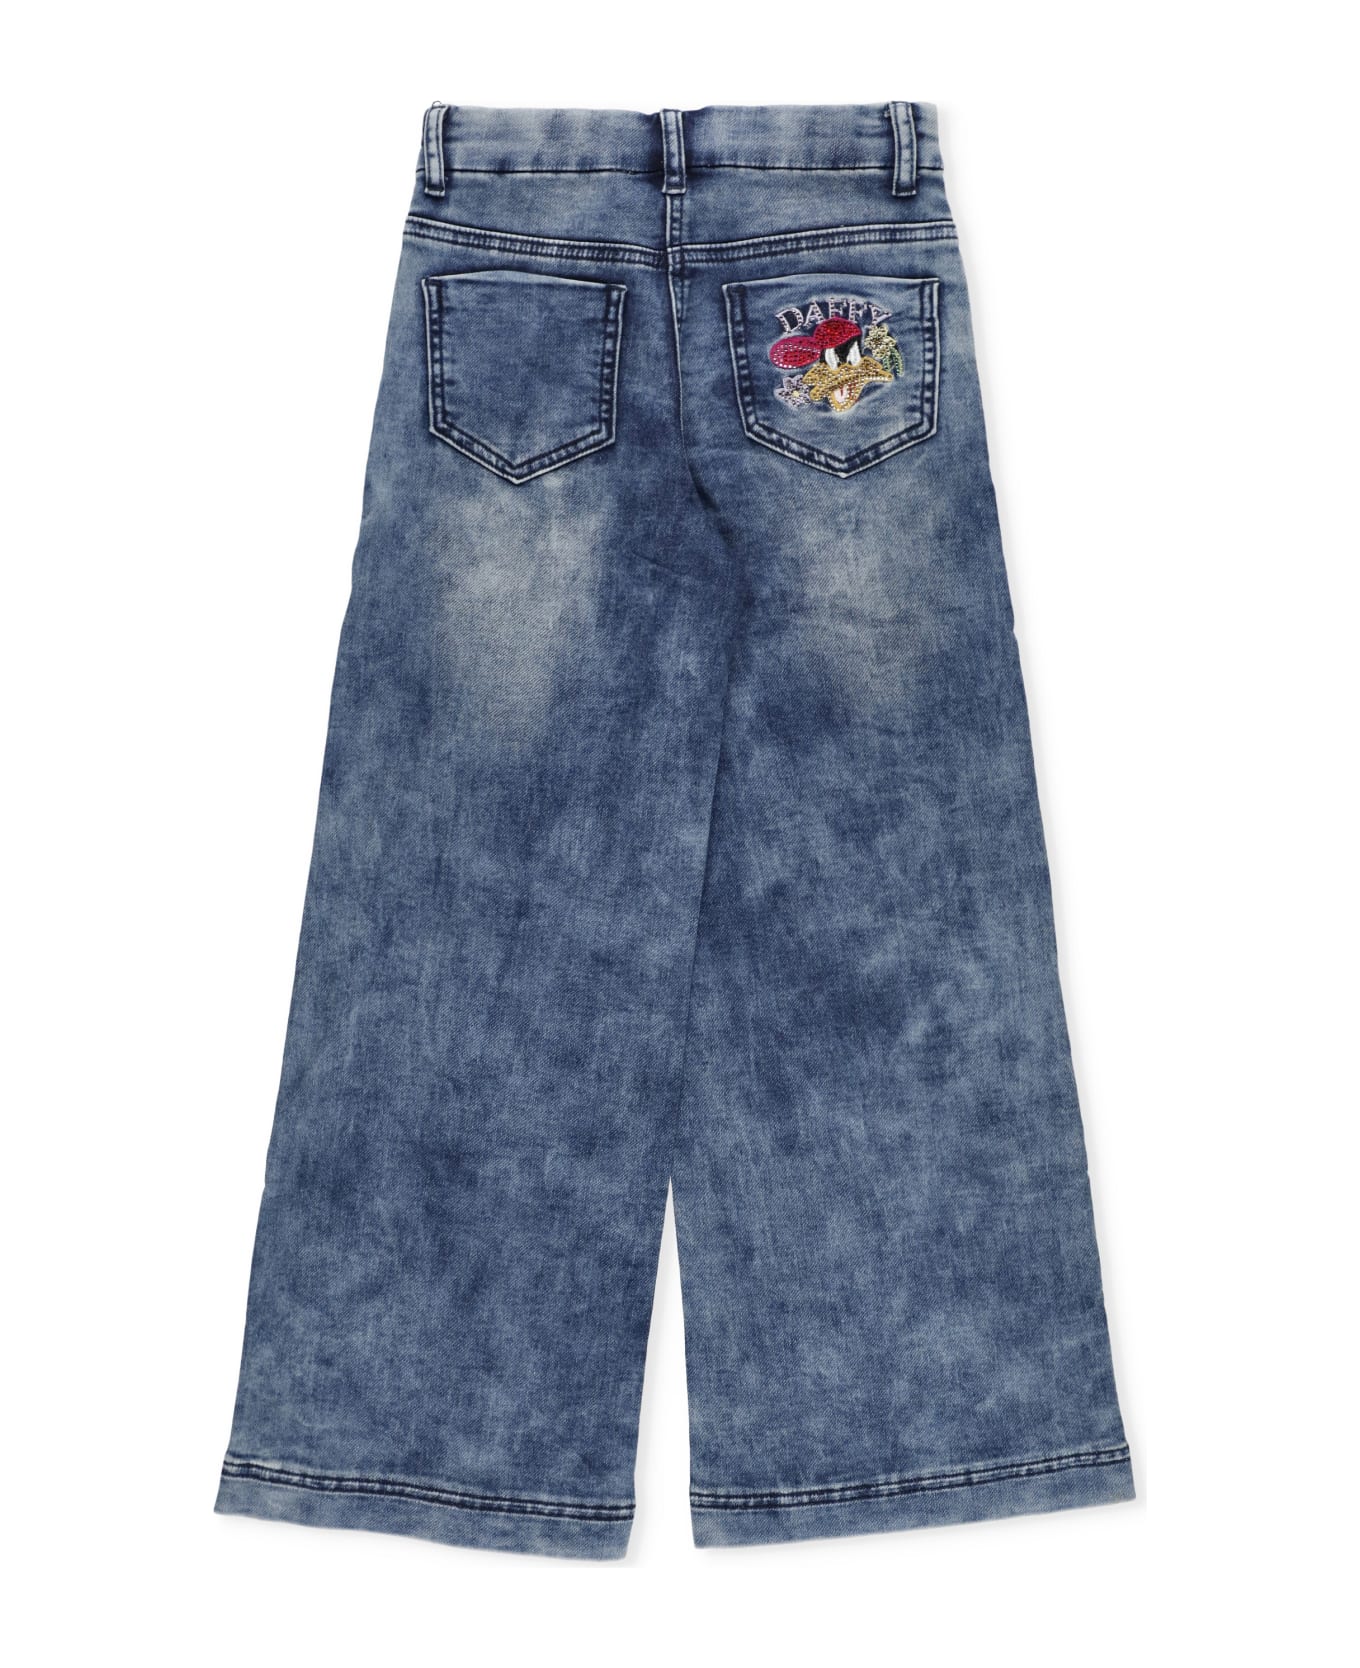 Monnalisa Cotton Jeans - DENIM BLUE ボトムス